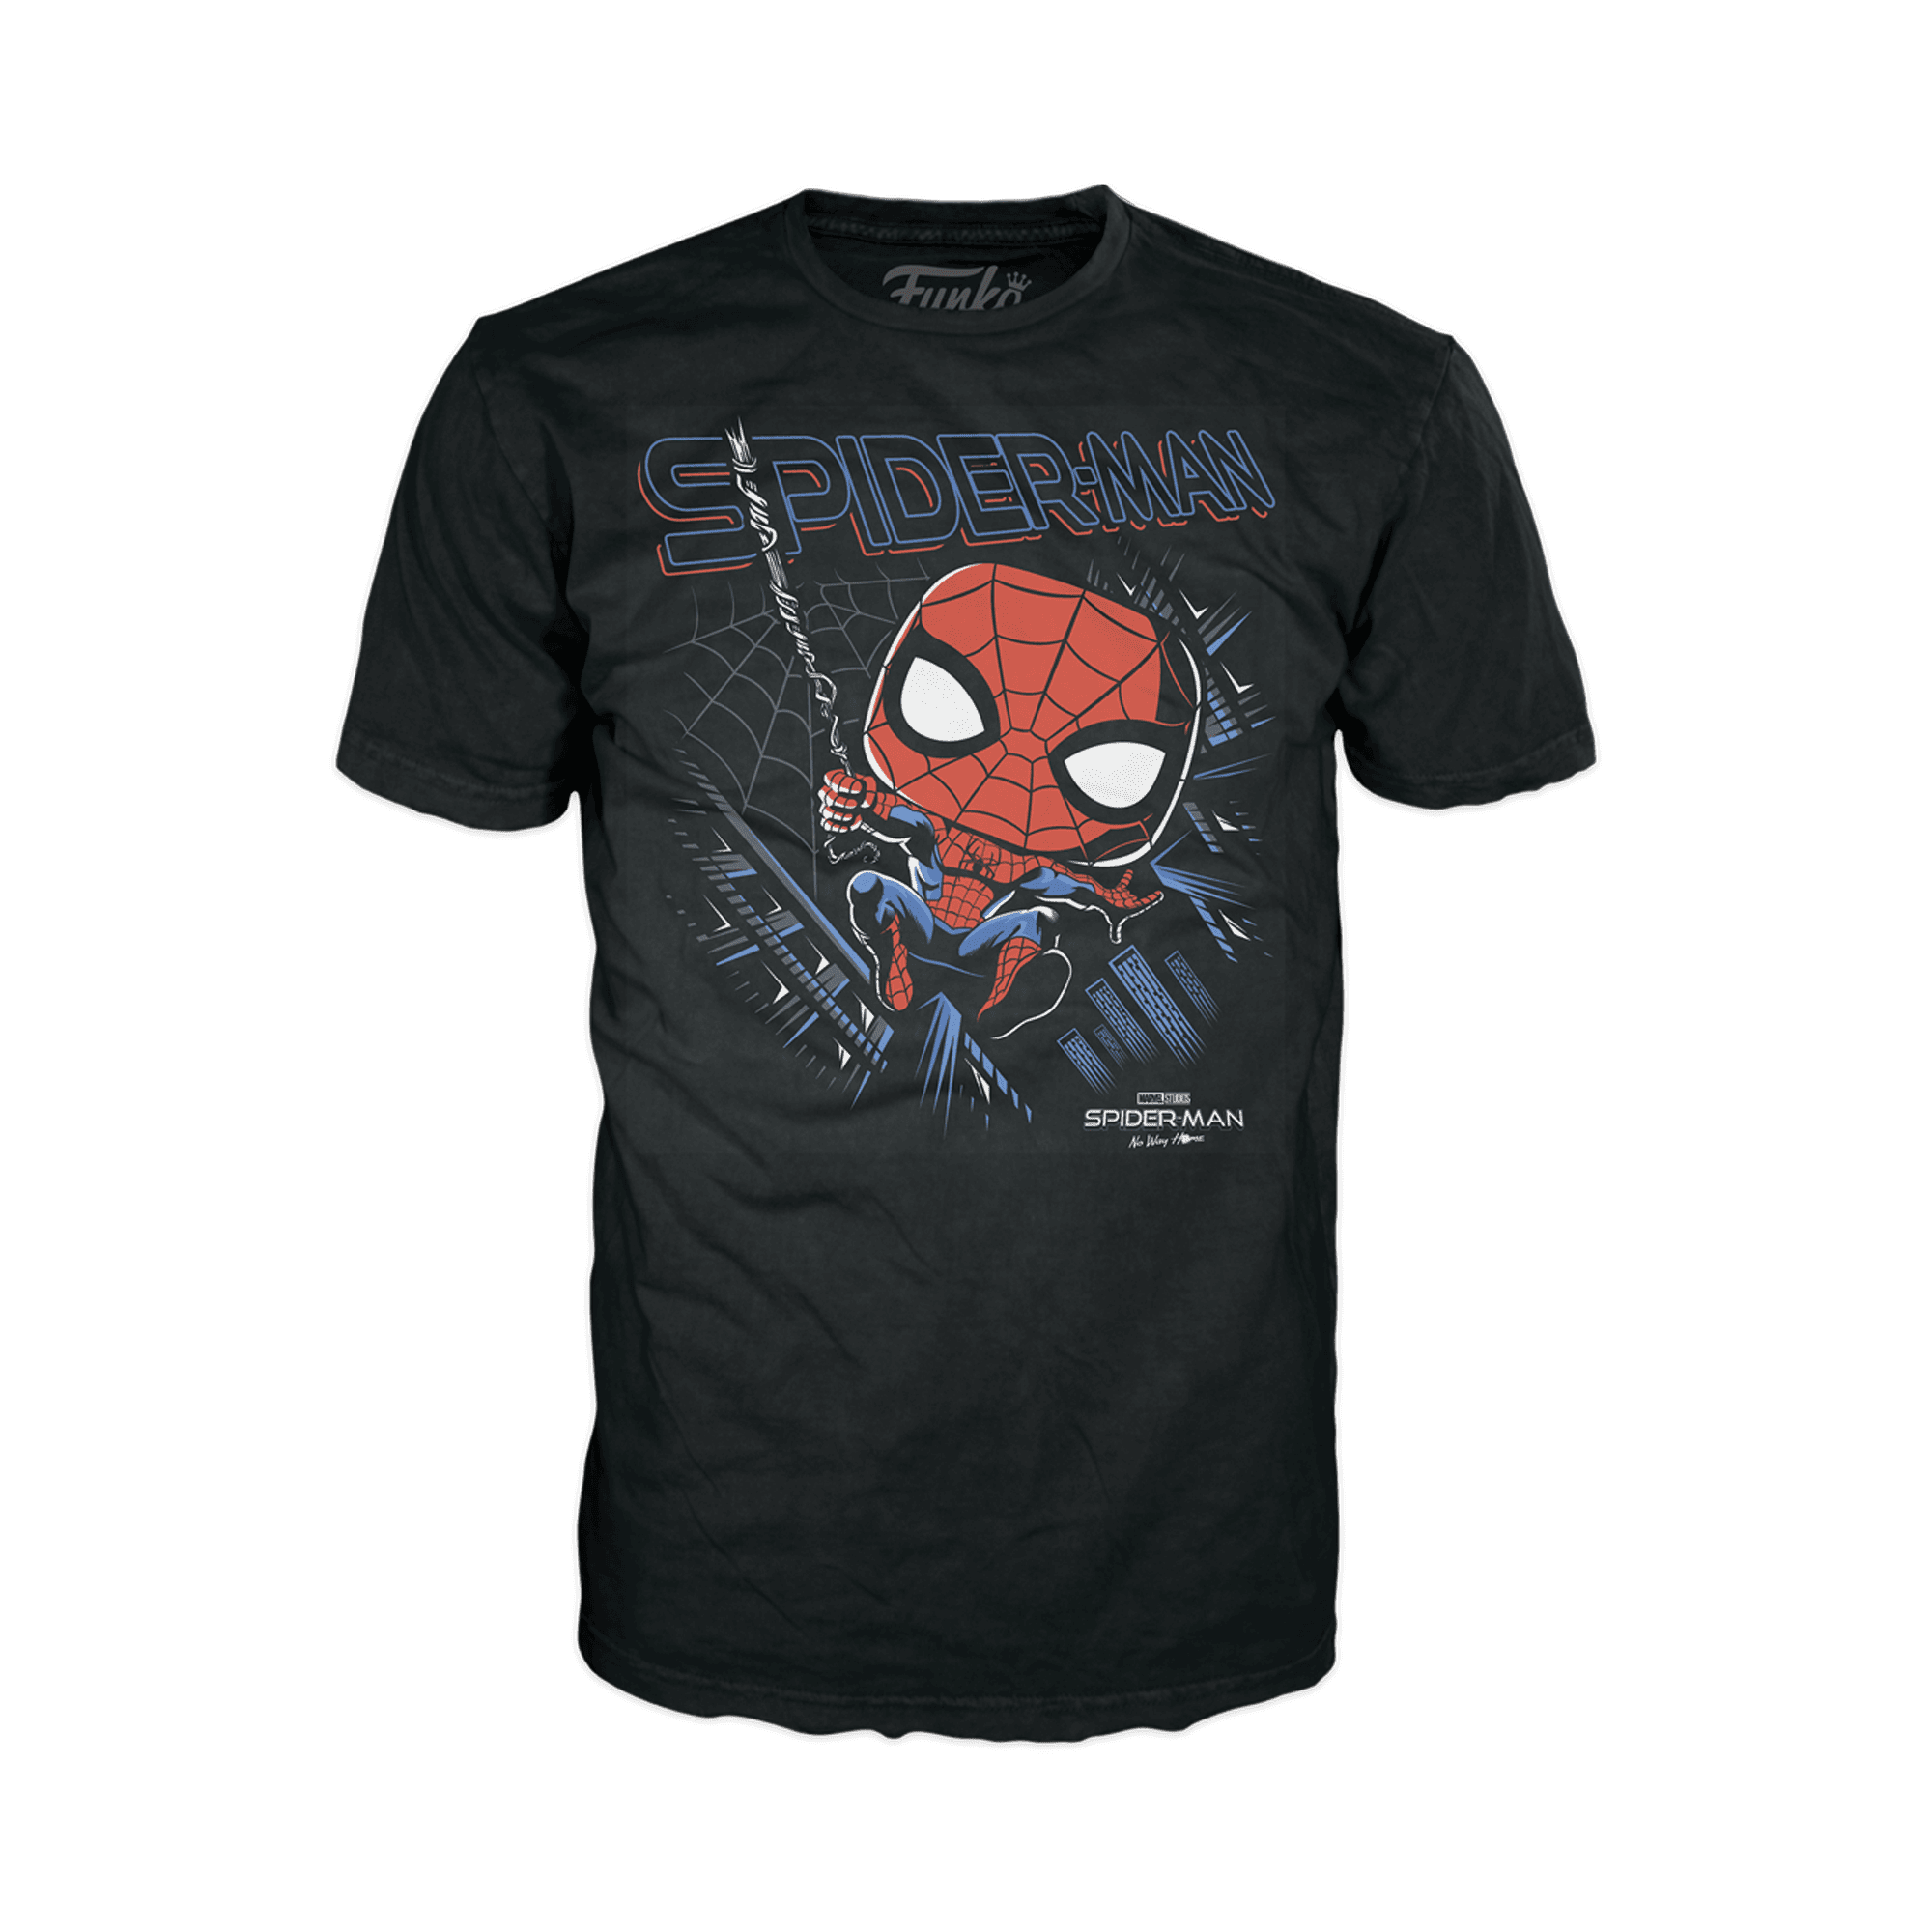 Spider-Man finale tee shirt, short sleeved, black, crewneck